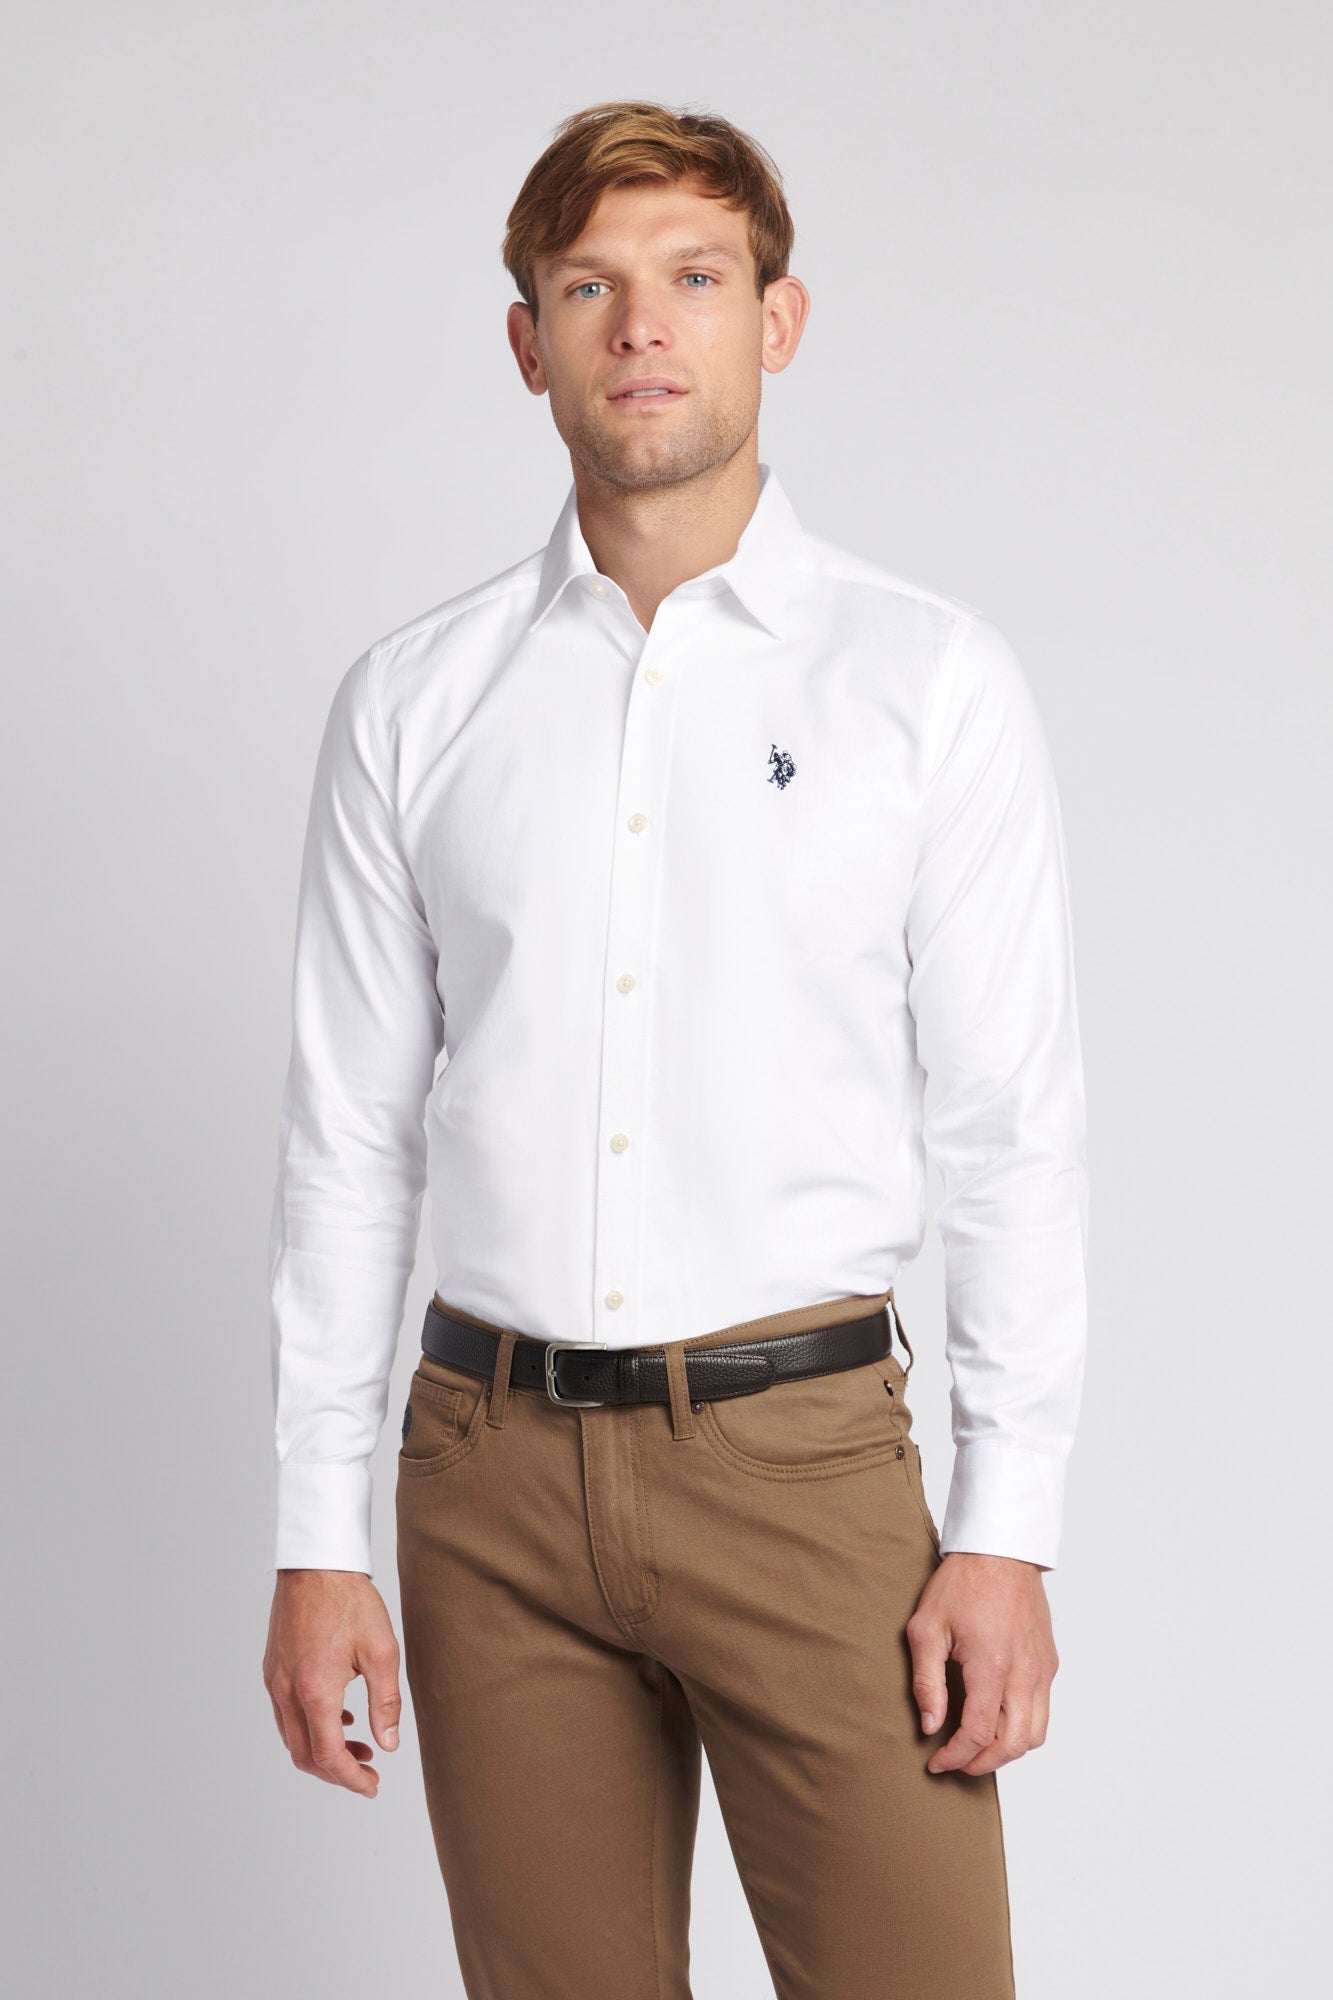 U.S. Polo Assn. Mens Long Sleeve Royal Twill Shirt in White